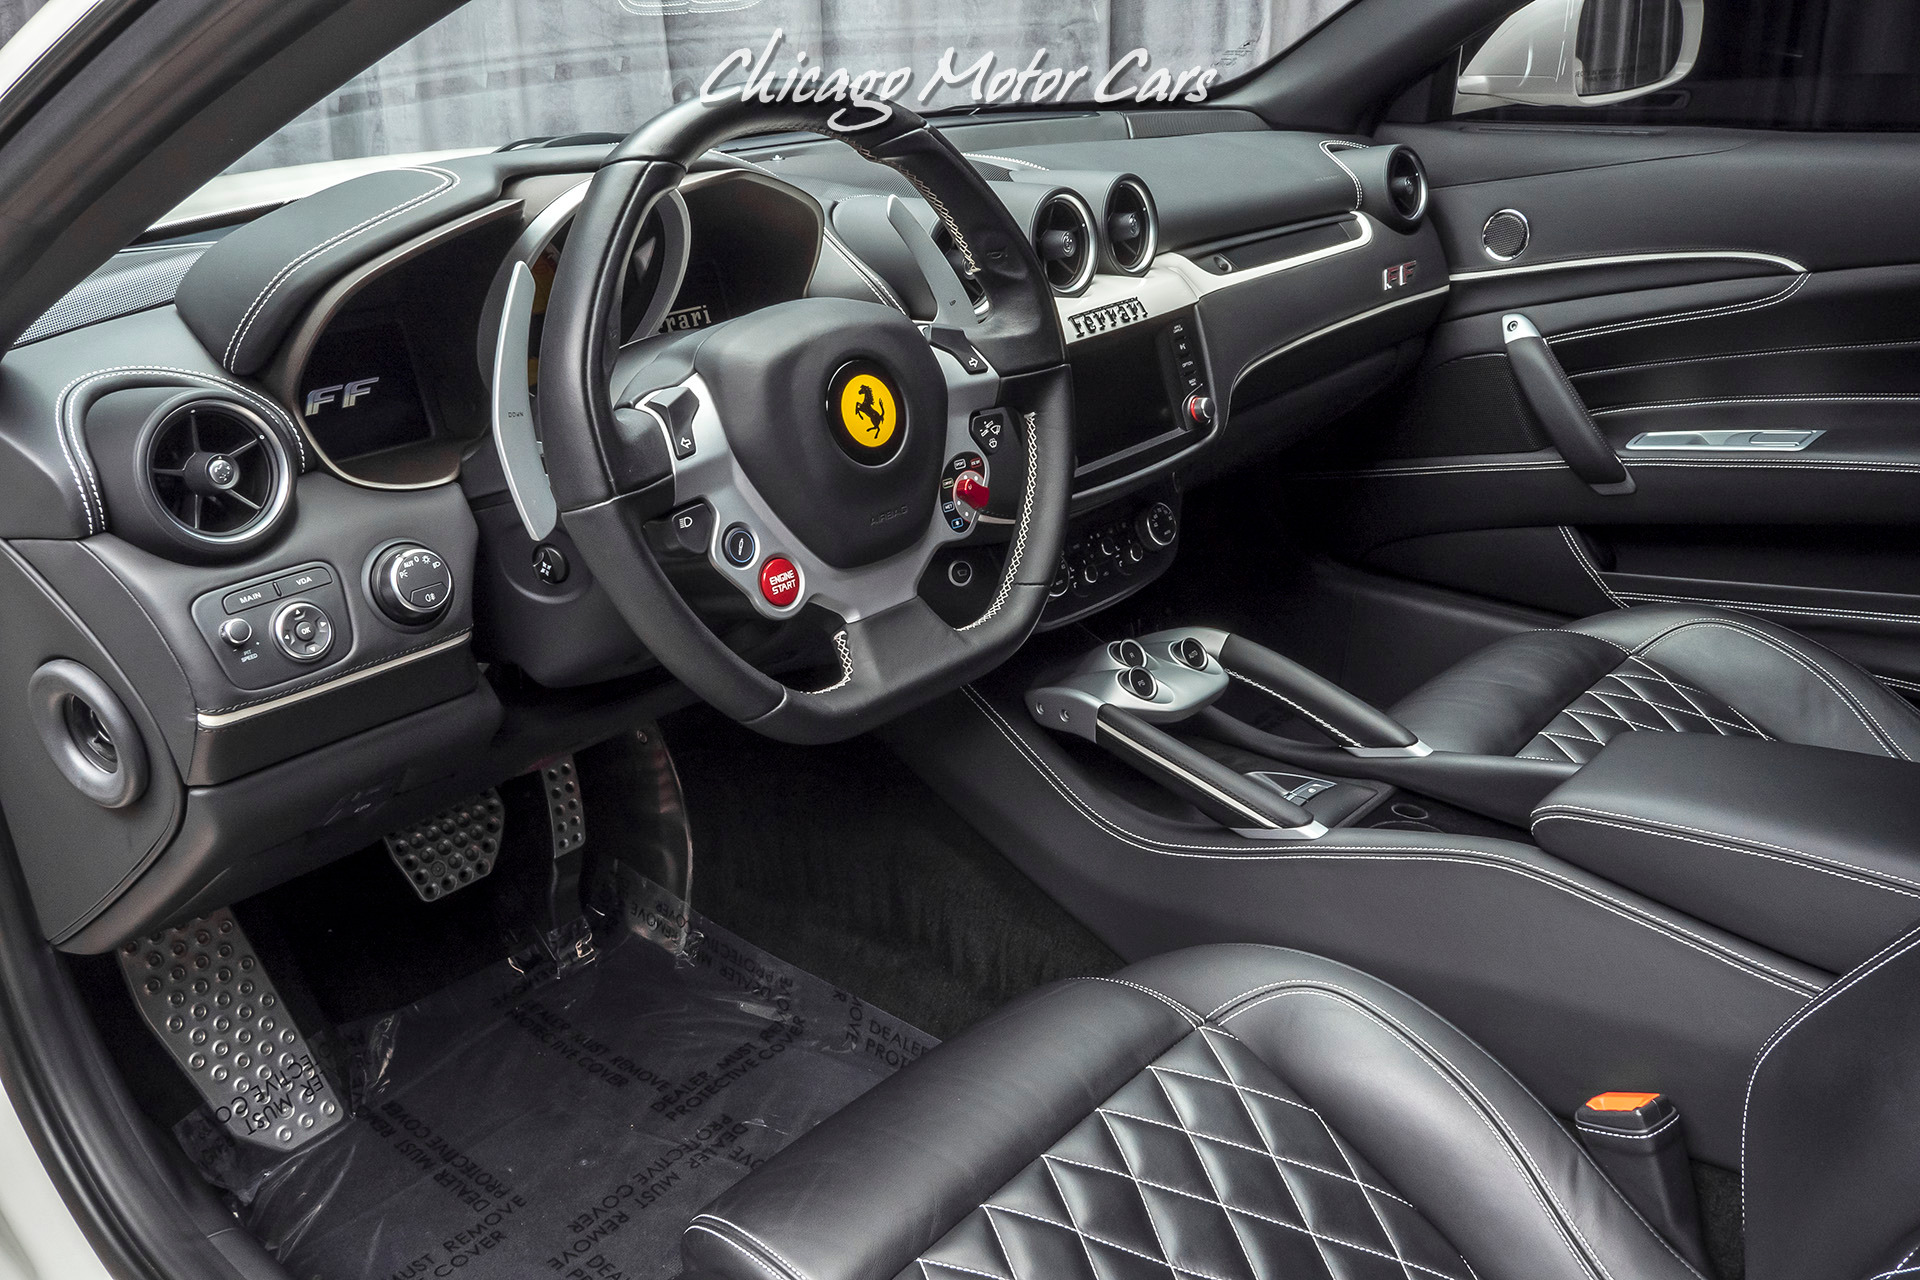 Used 2016 Ferrari Ff Hatchback Diamond Pattern Style Seats